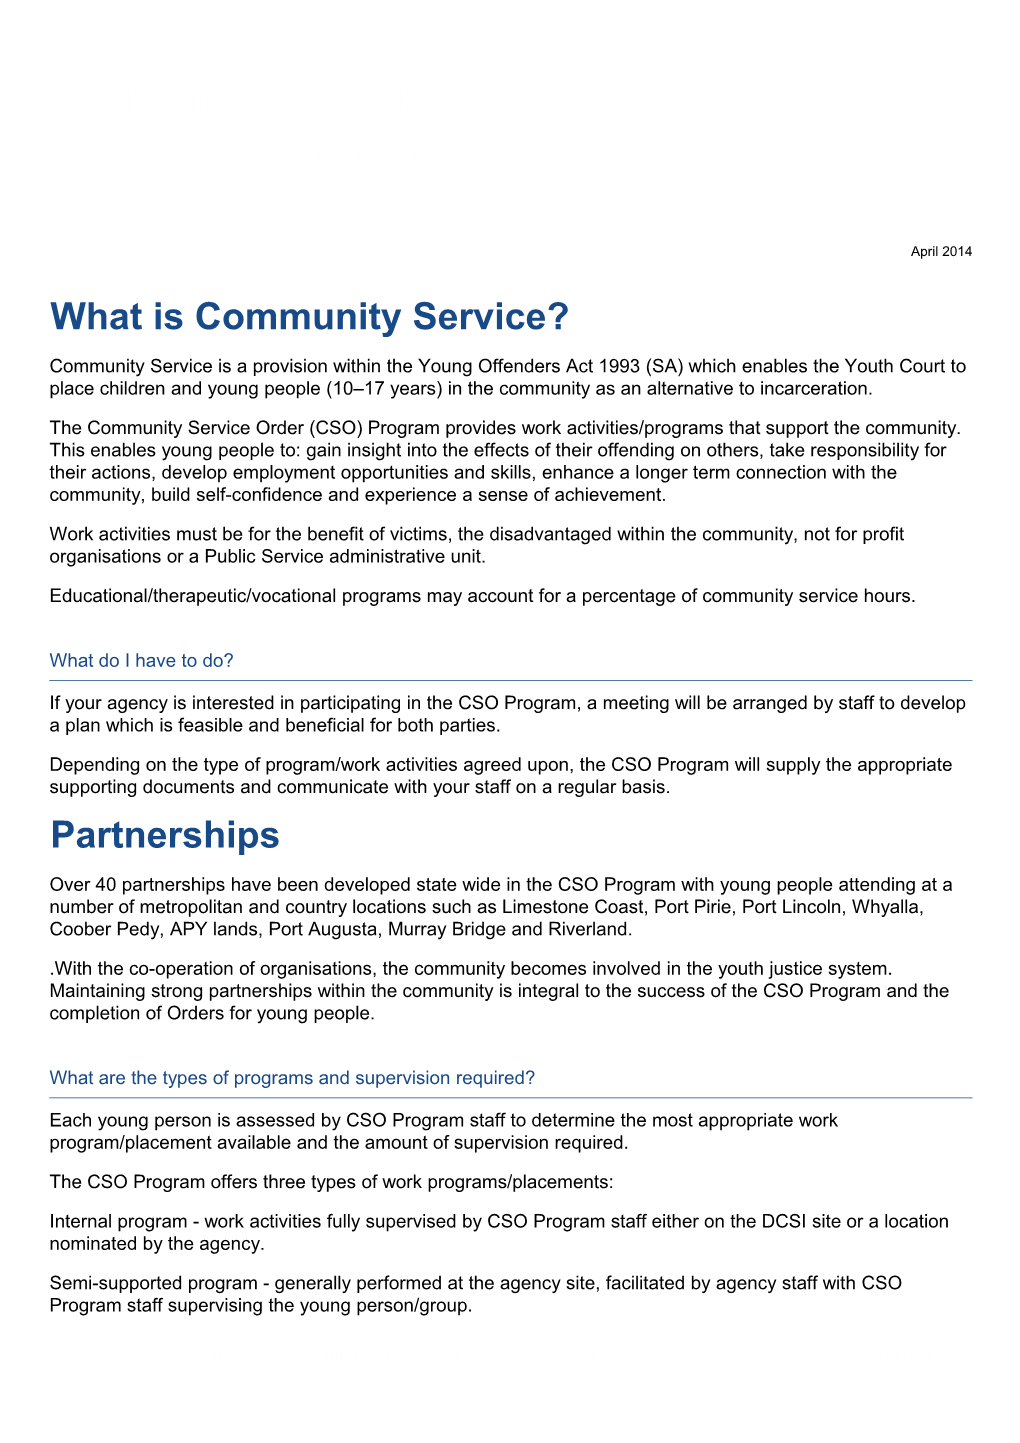 Community Service Partnerships Information